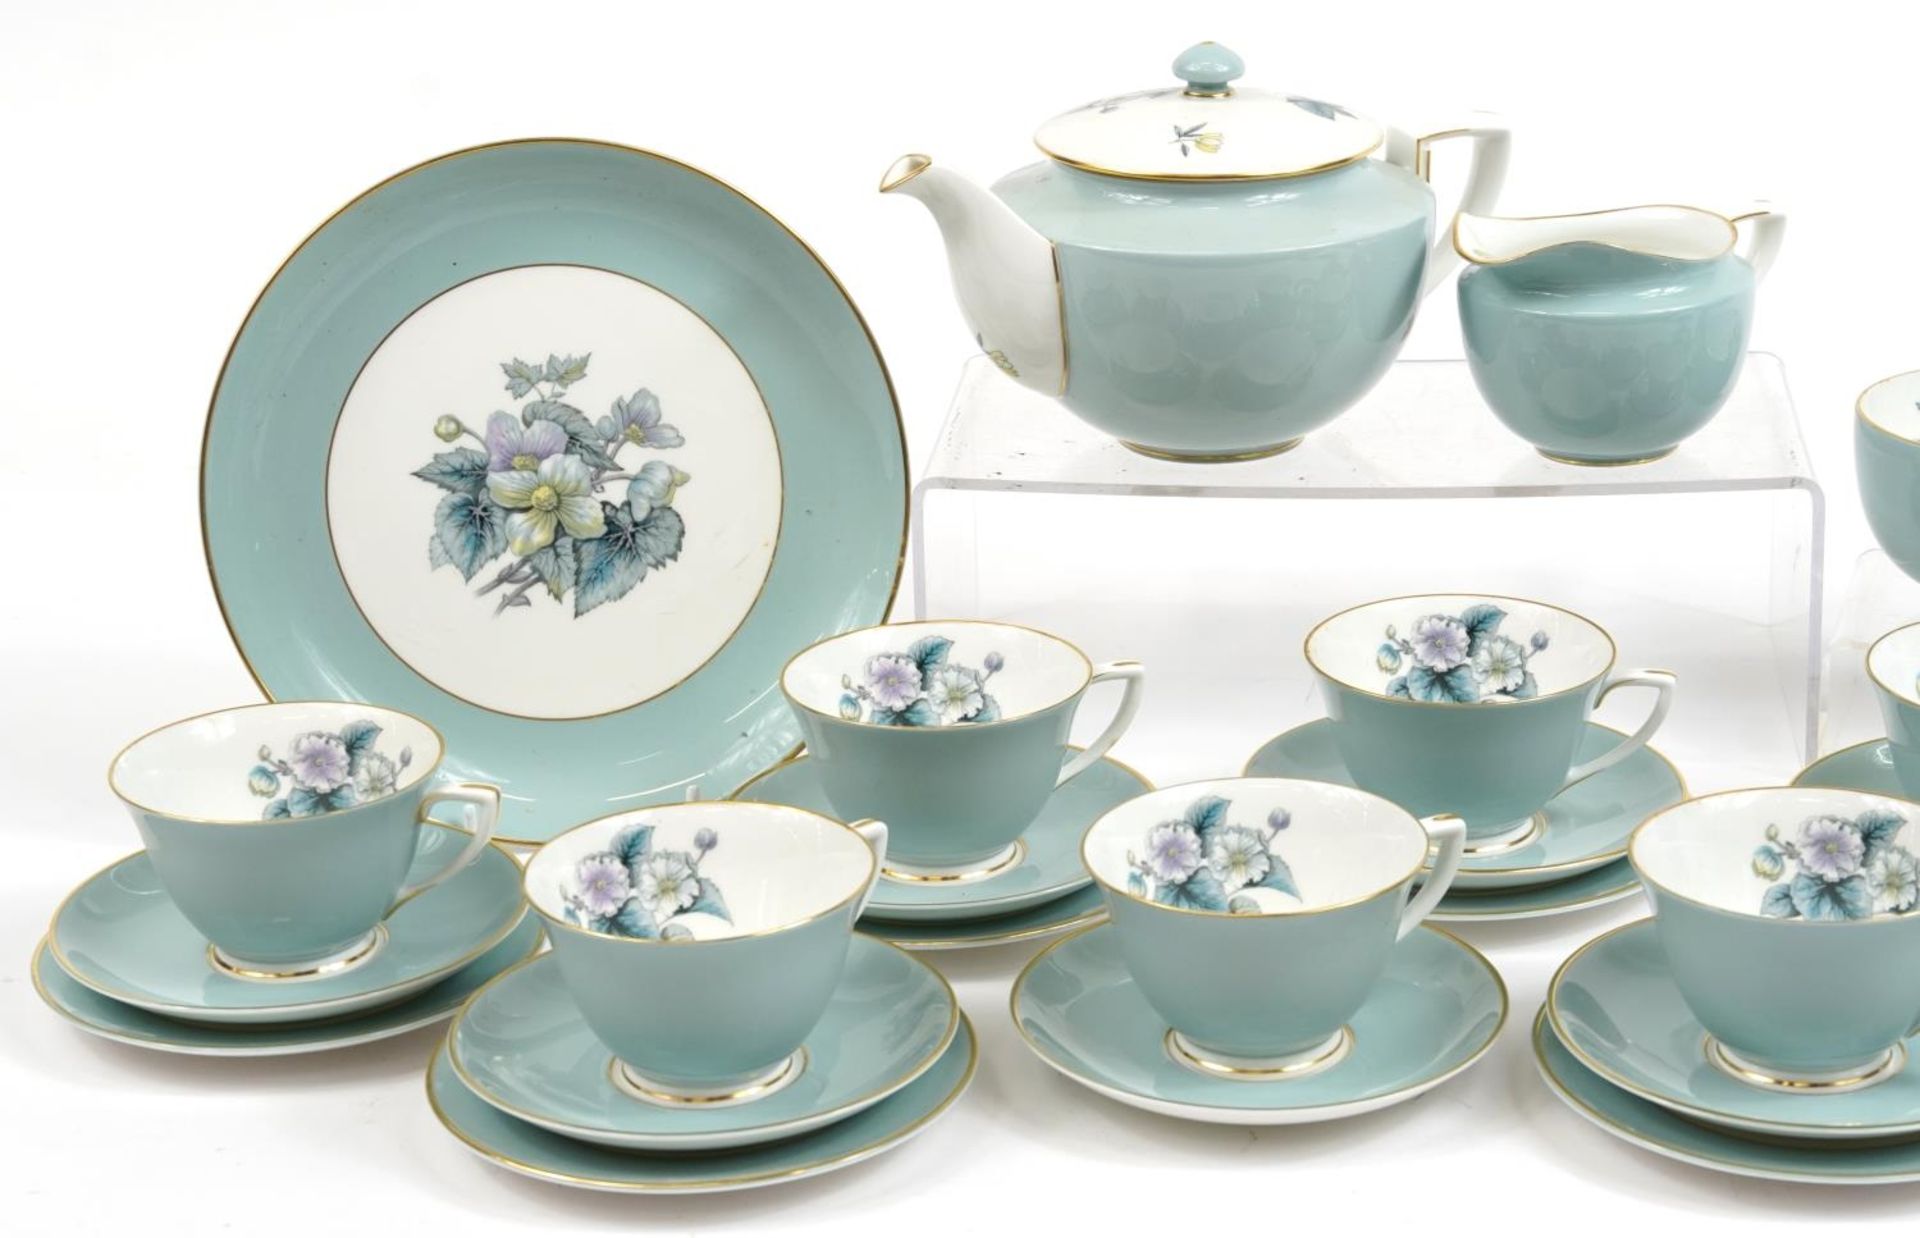 Royal Worcester Woodland pattern teaware including teapot, milk jug, sugar bowl and trios - Image 2 of 4